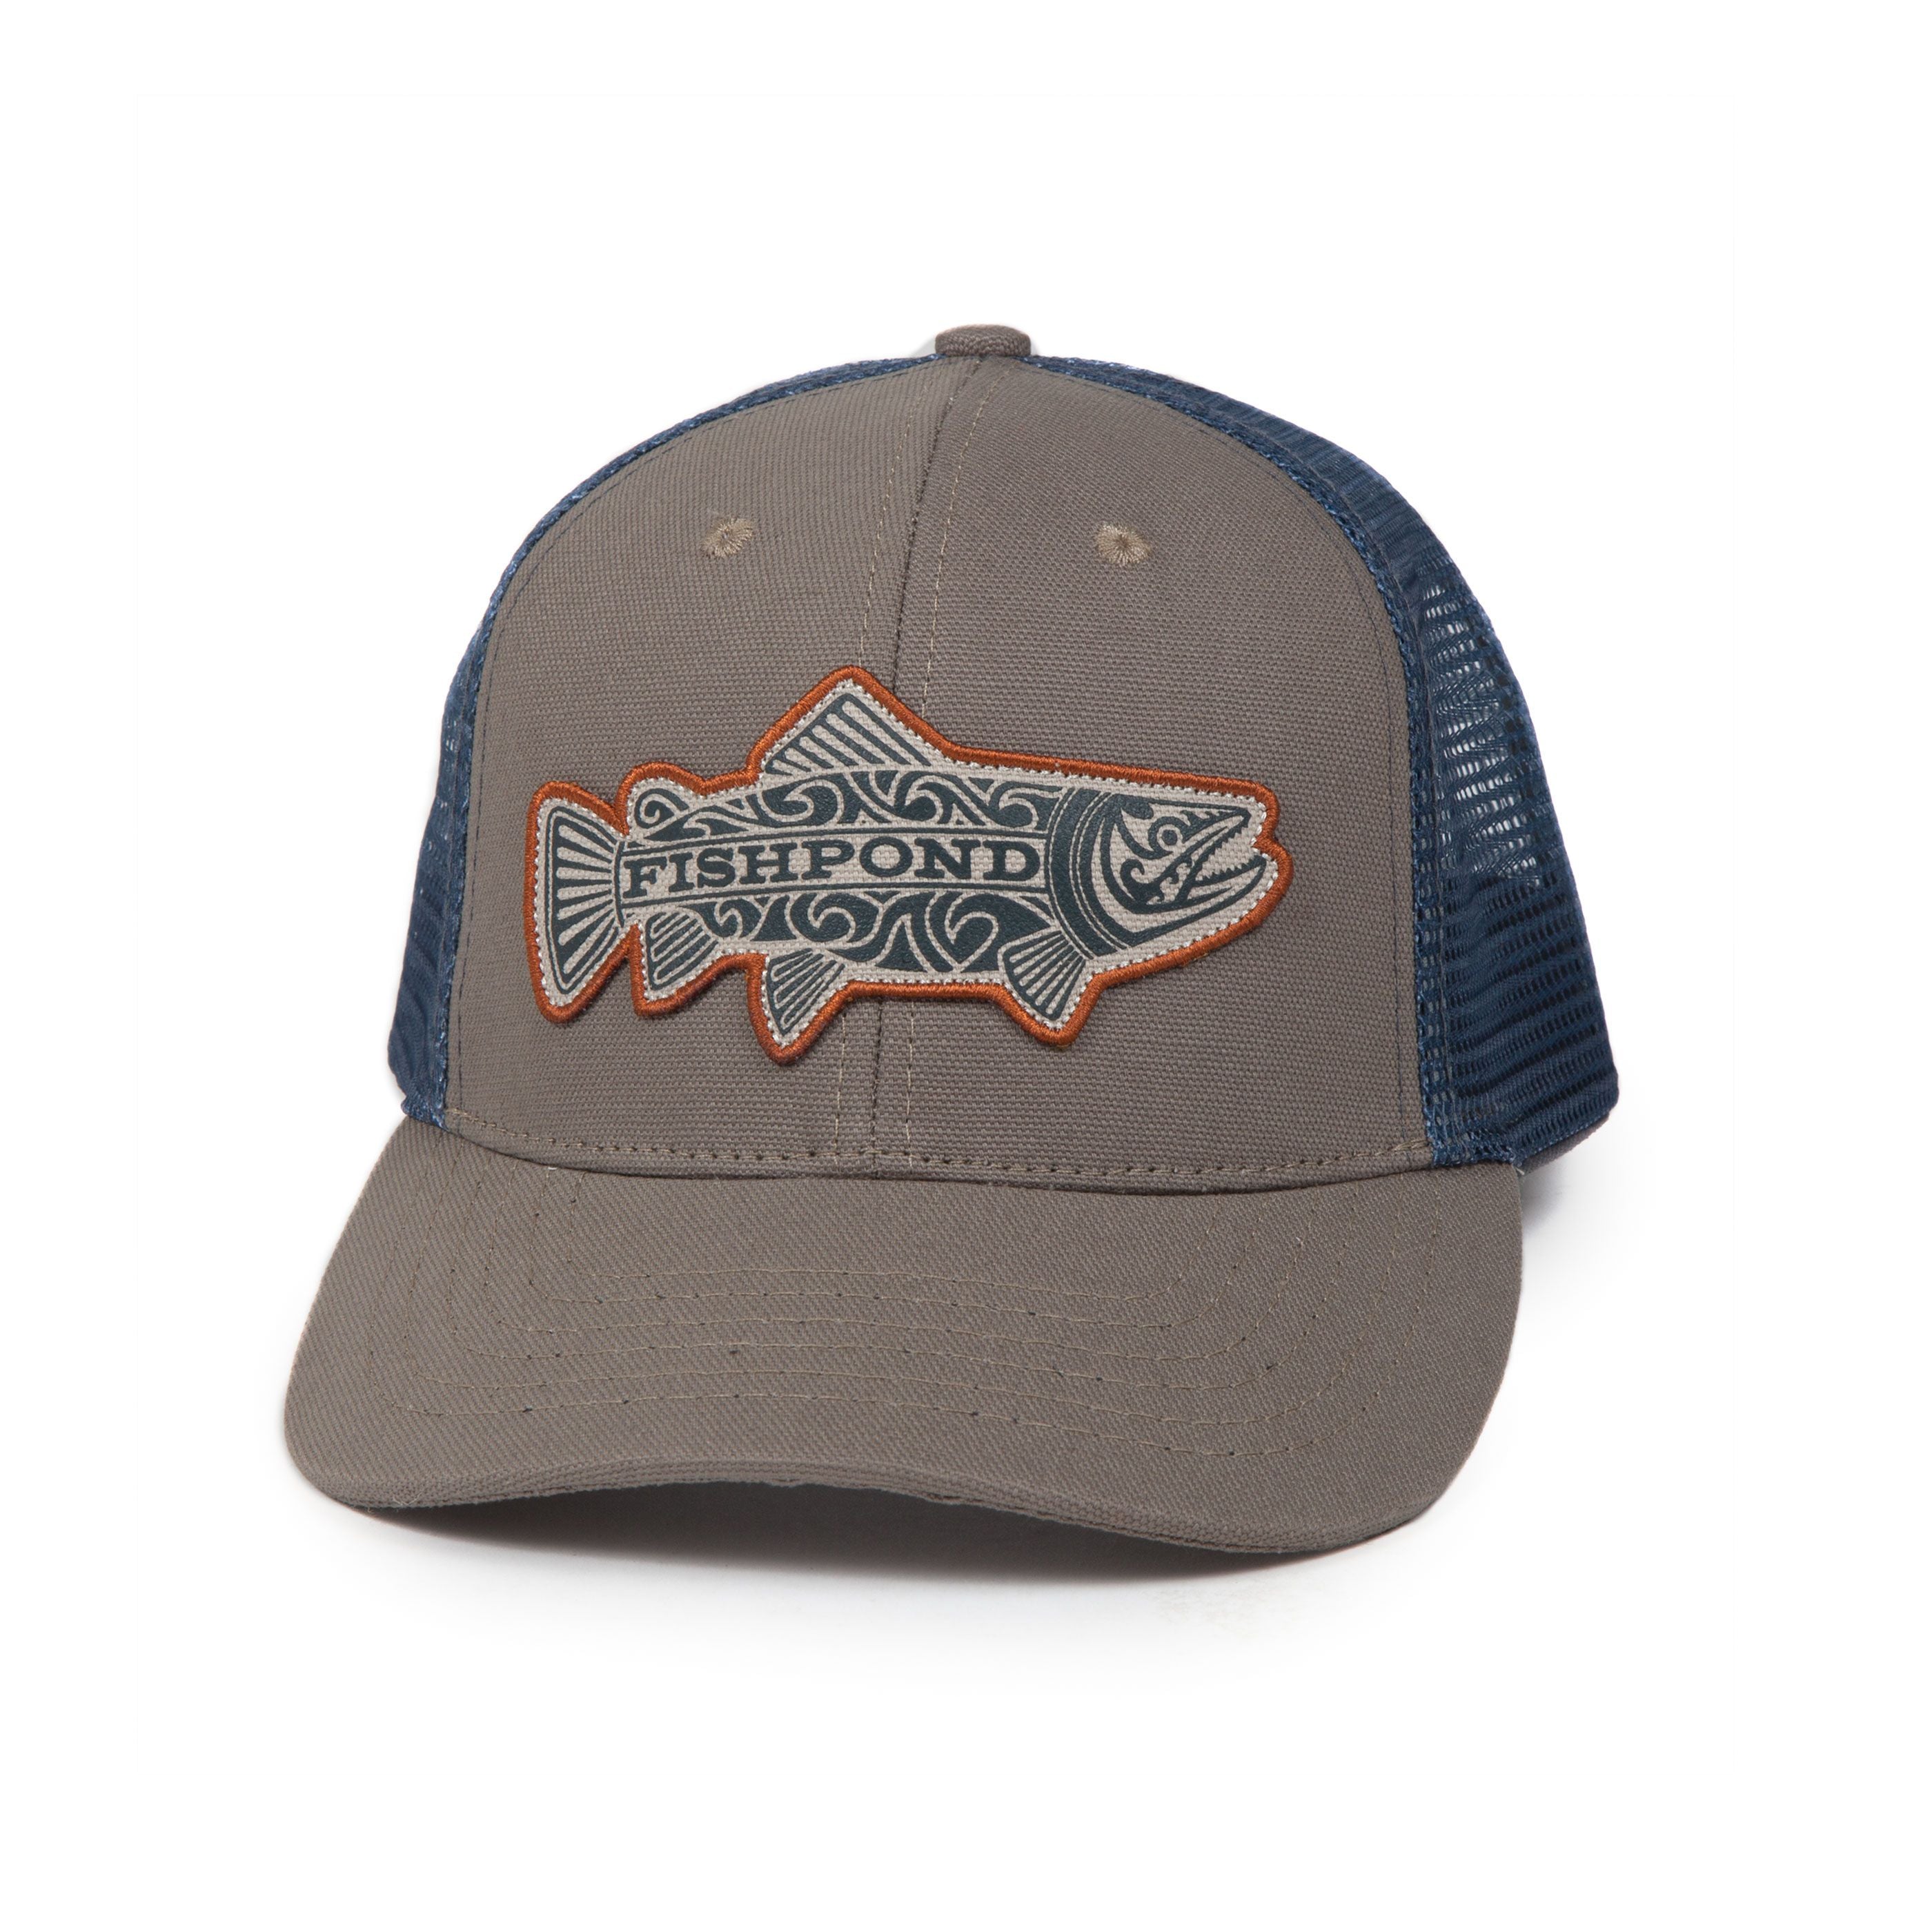 Fishpond Maori Trout Hat - Sandstone / Slate